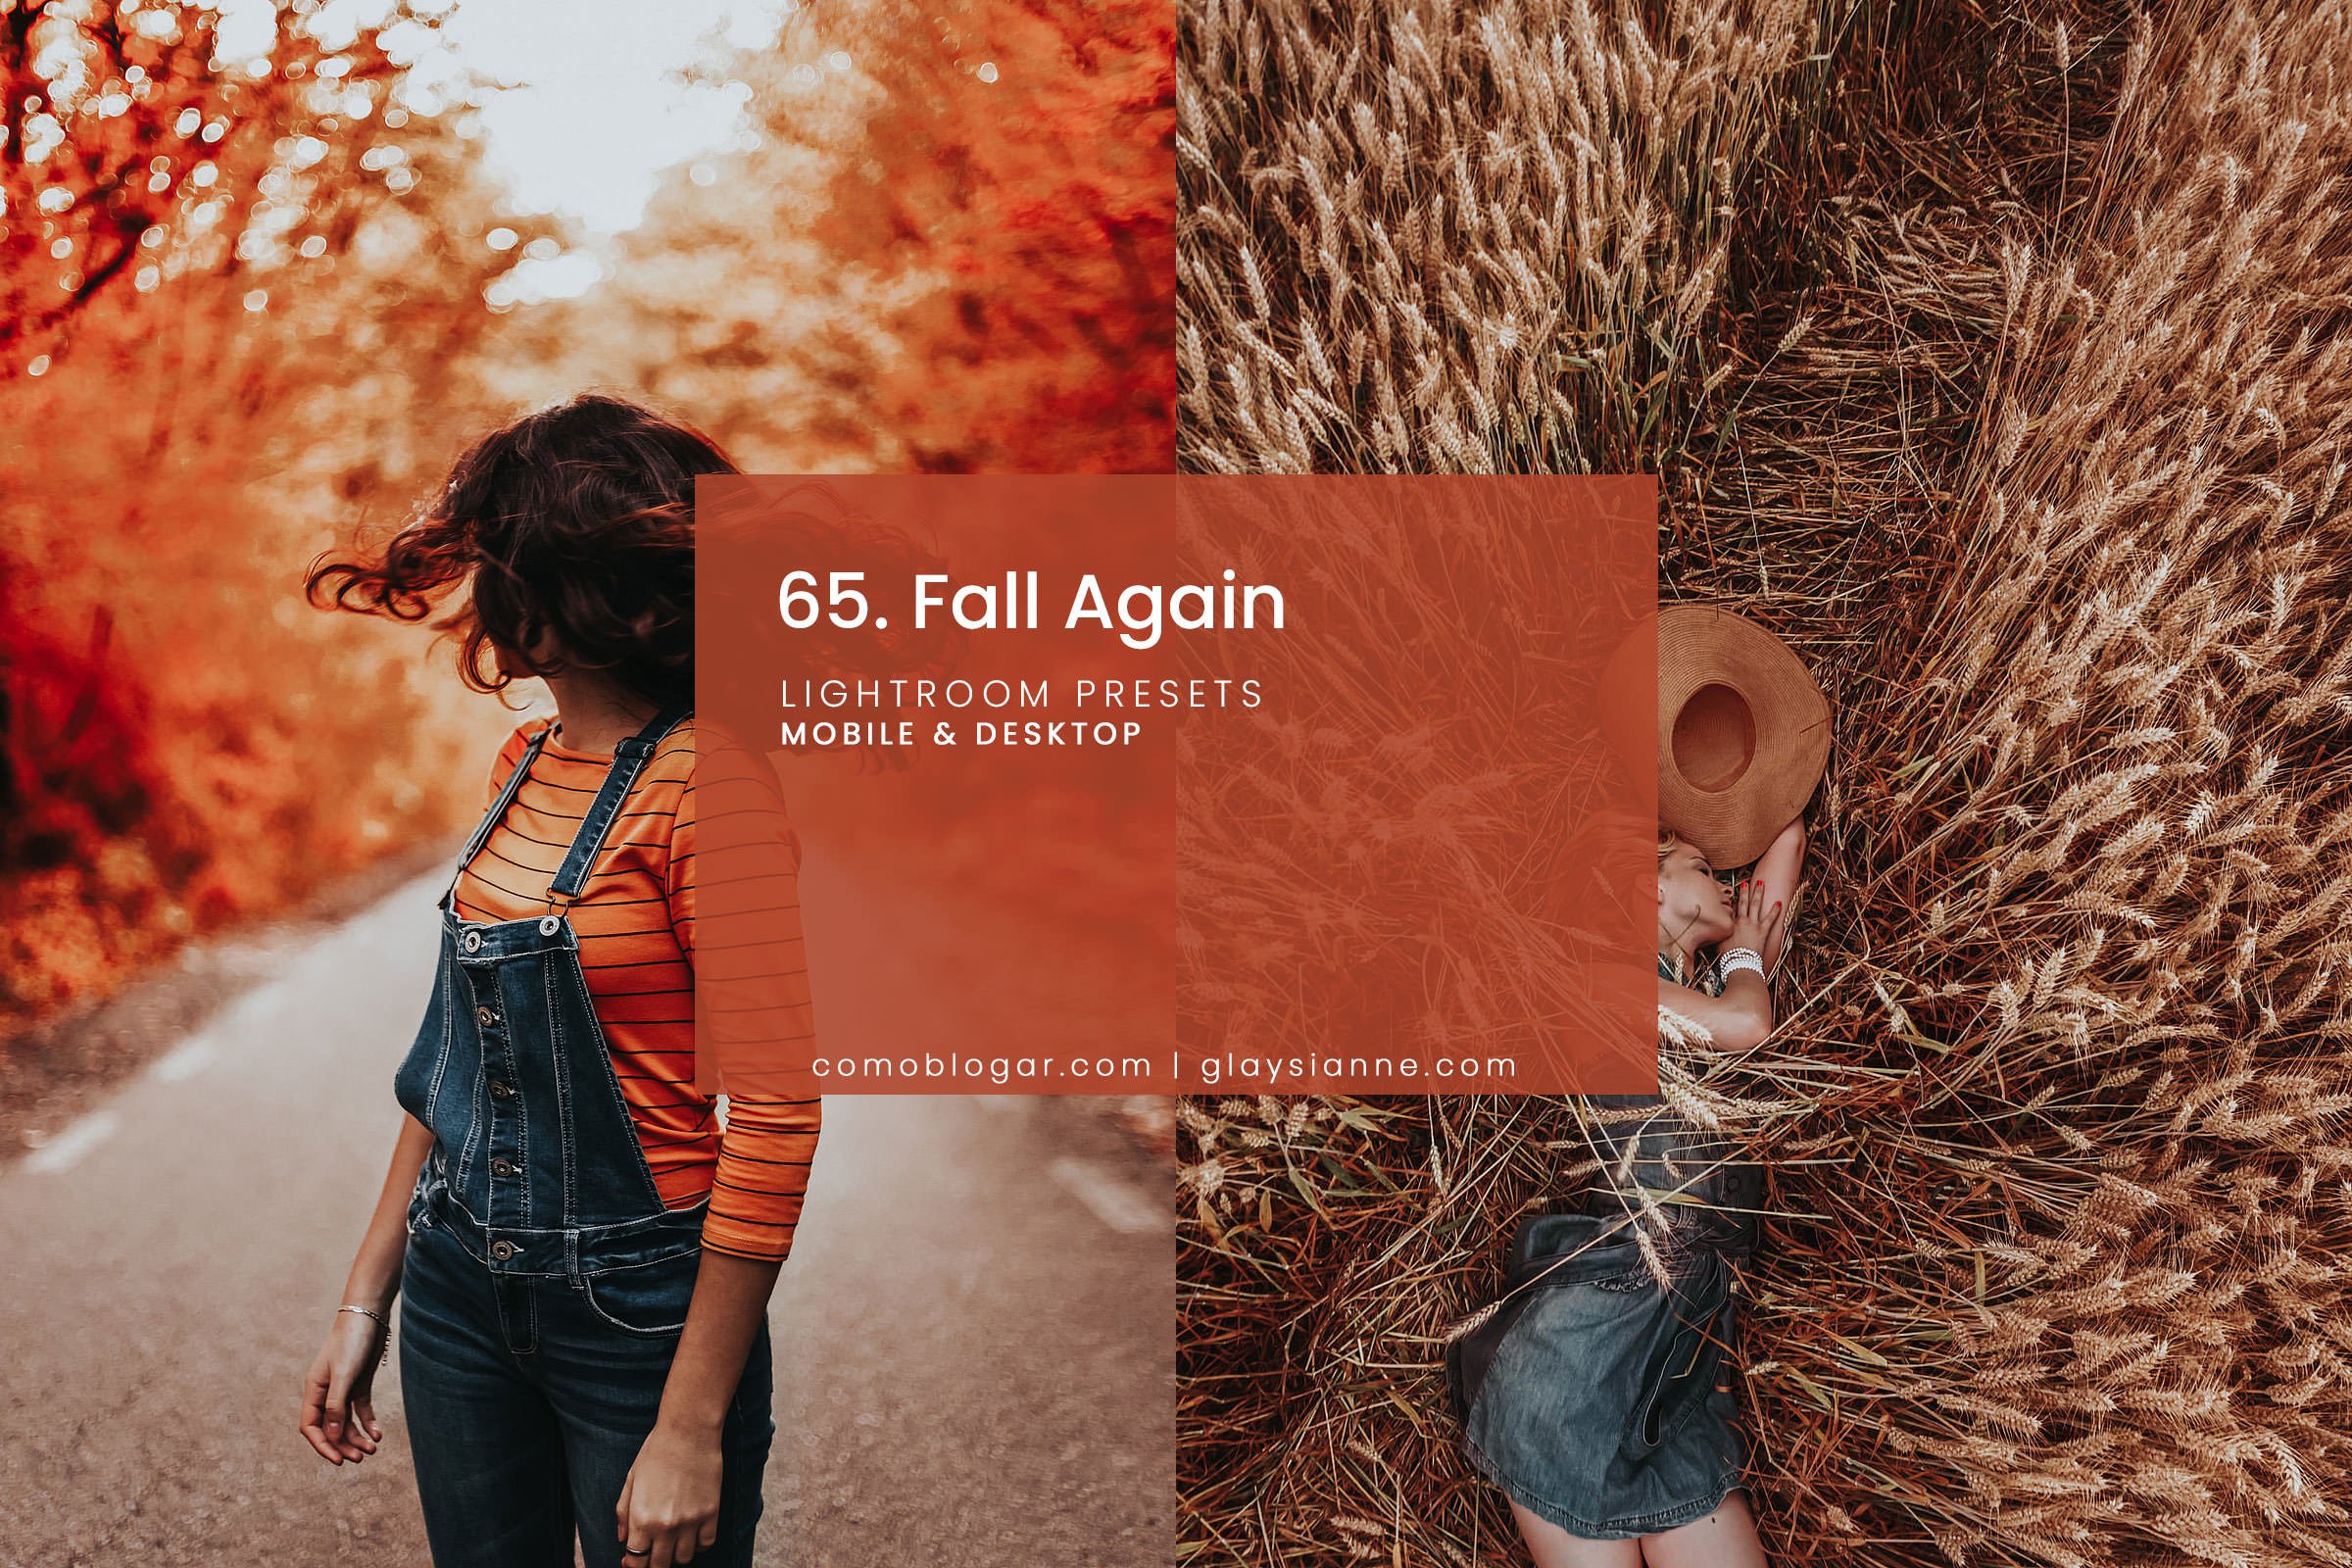 65. Fall Againcover image.